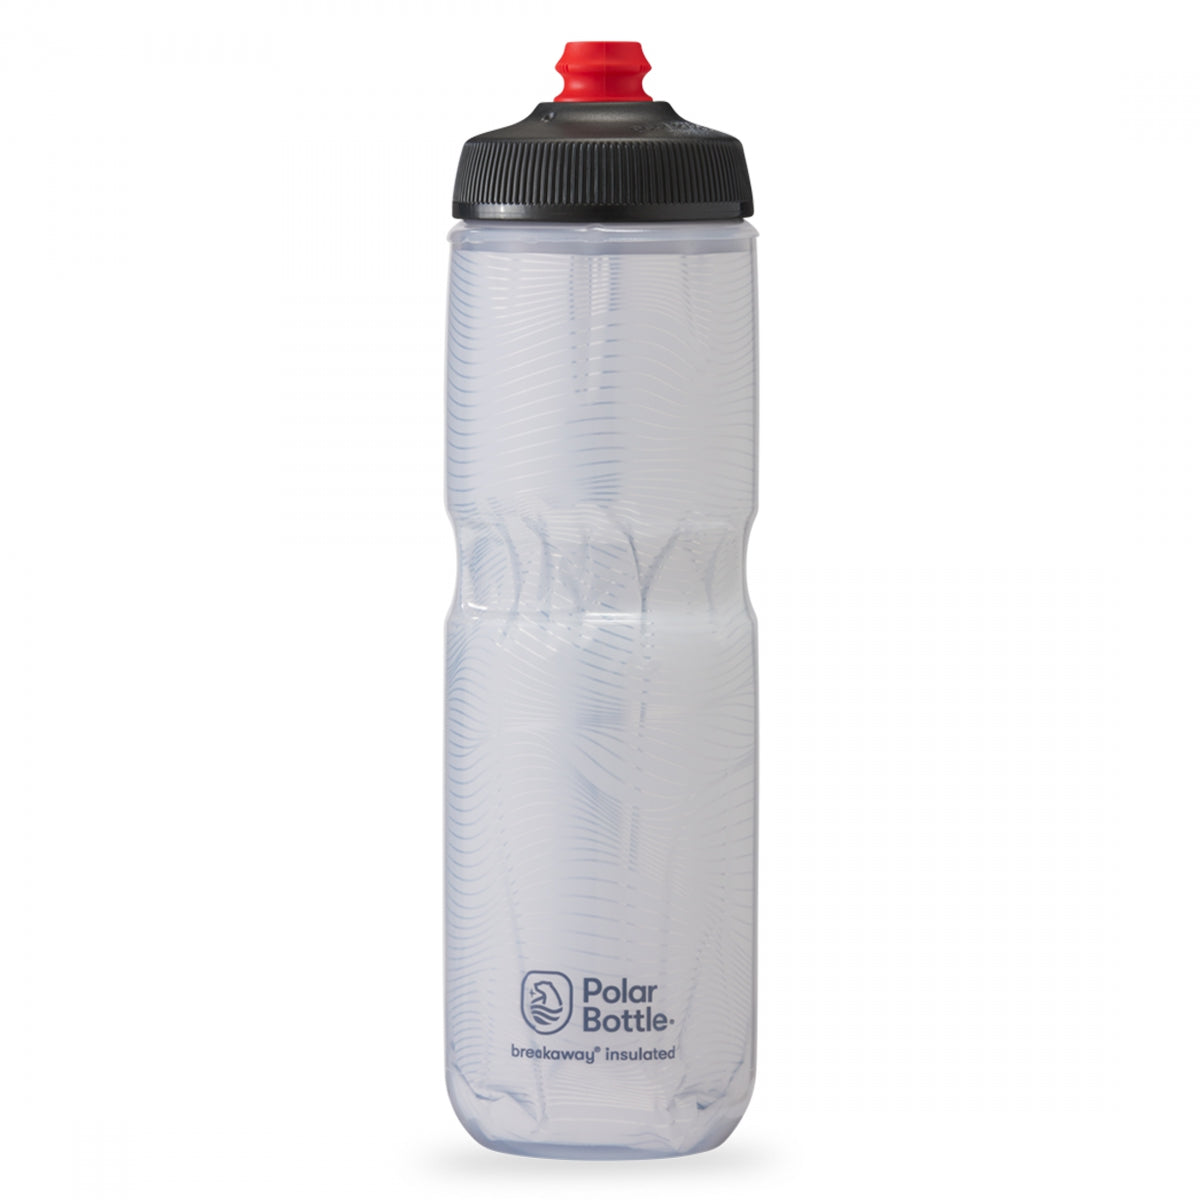 Tested] Polar Breakaway Insulated Bottle